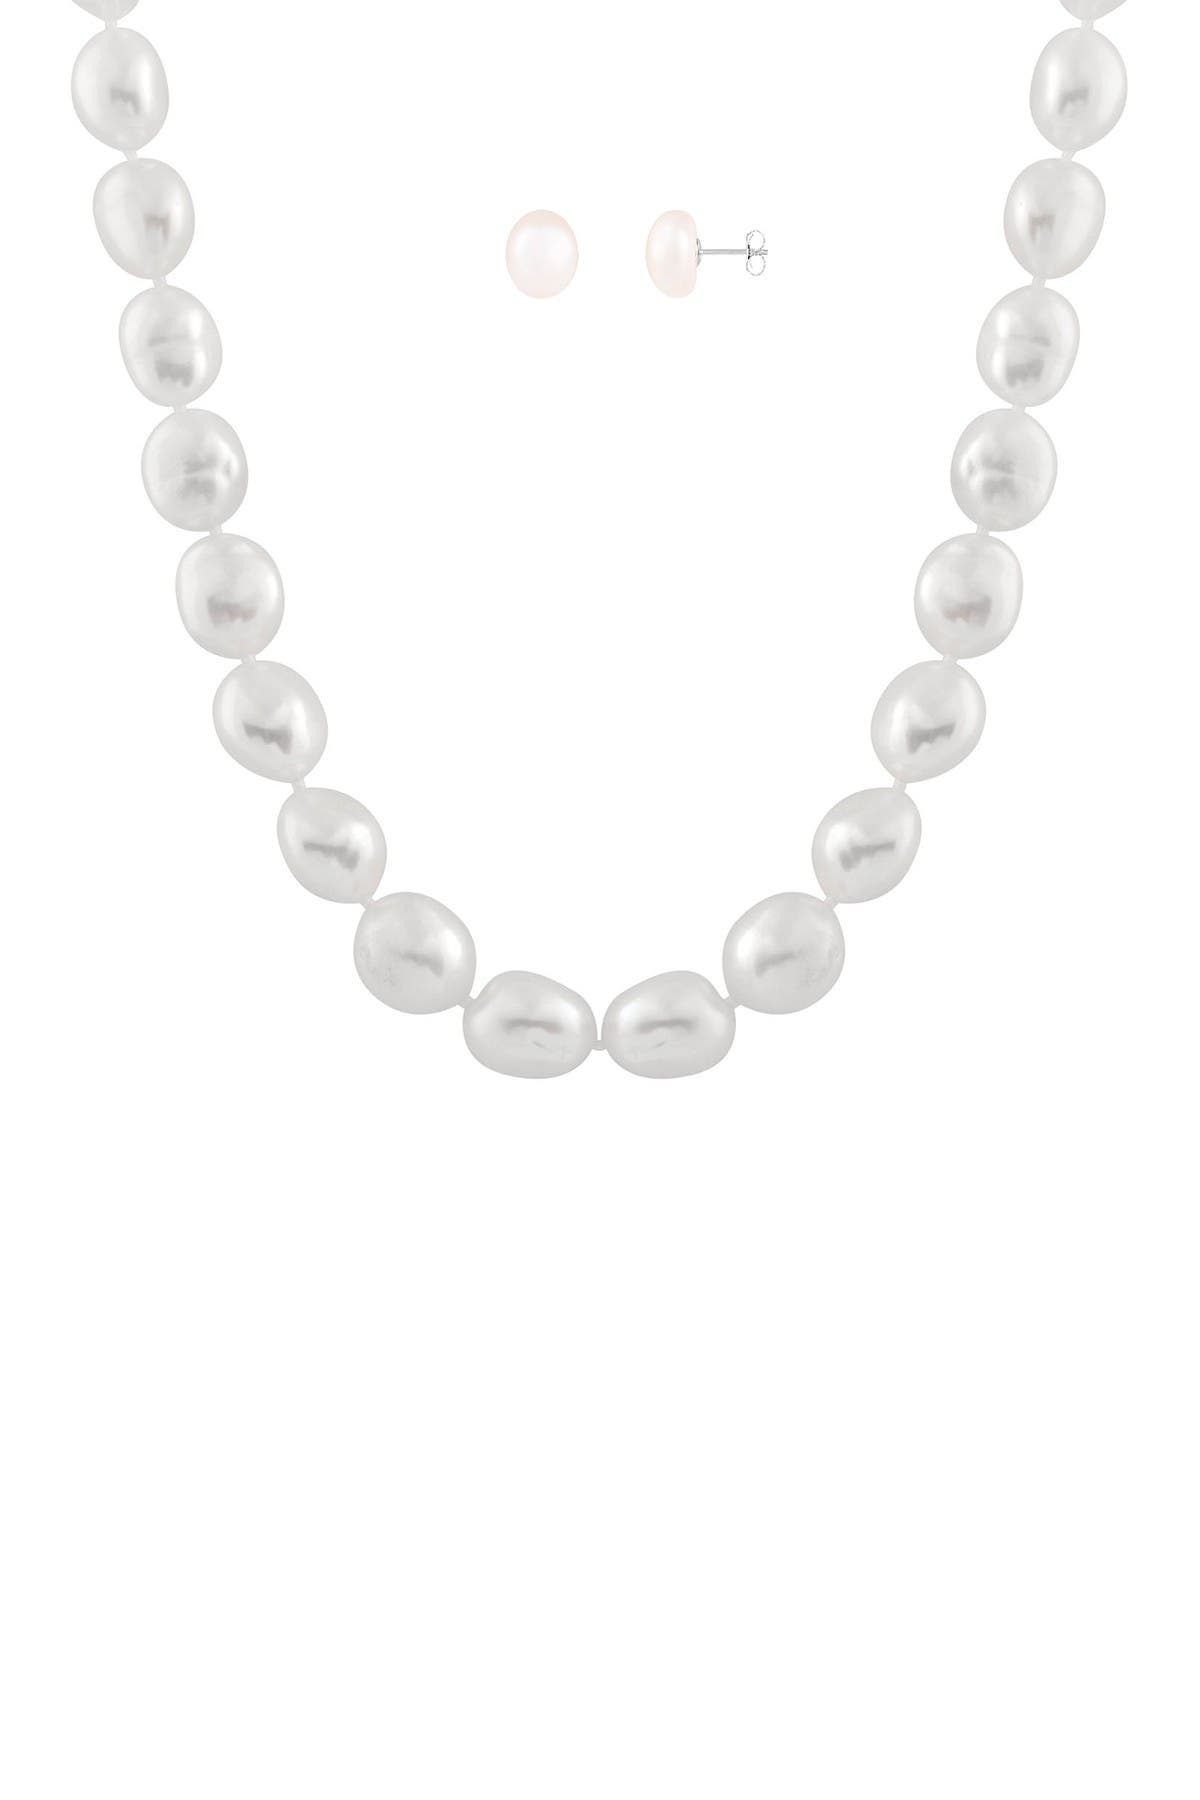 Splendid Pearls 9-10mm Freshwater Pearl Necklace & Earrings Set In White